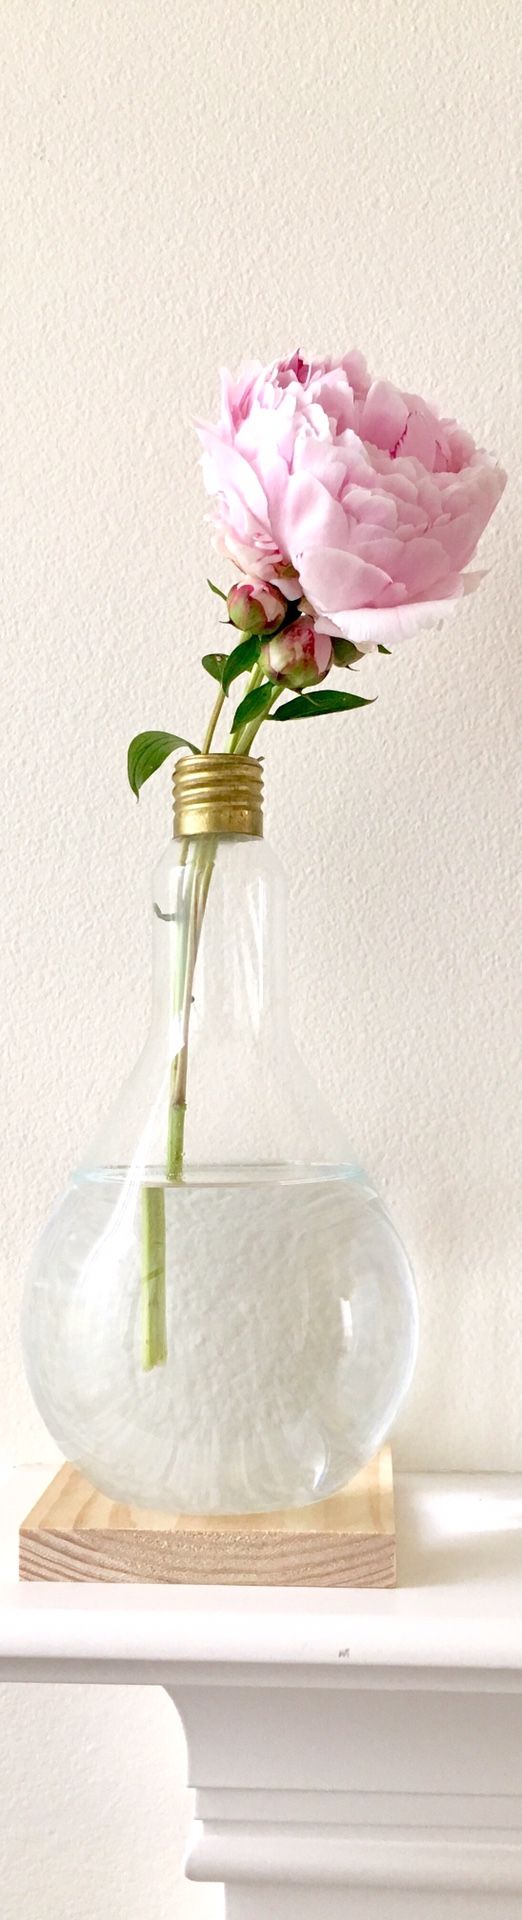 Giant eco friendly repurposed light bulb vase, upcycle flower vase, glass bud vase, upcycle home decor (not including the flower)